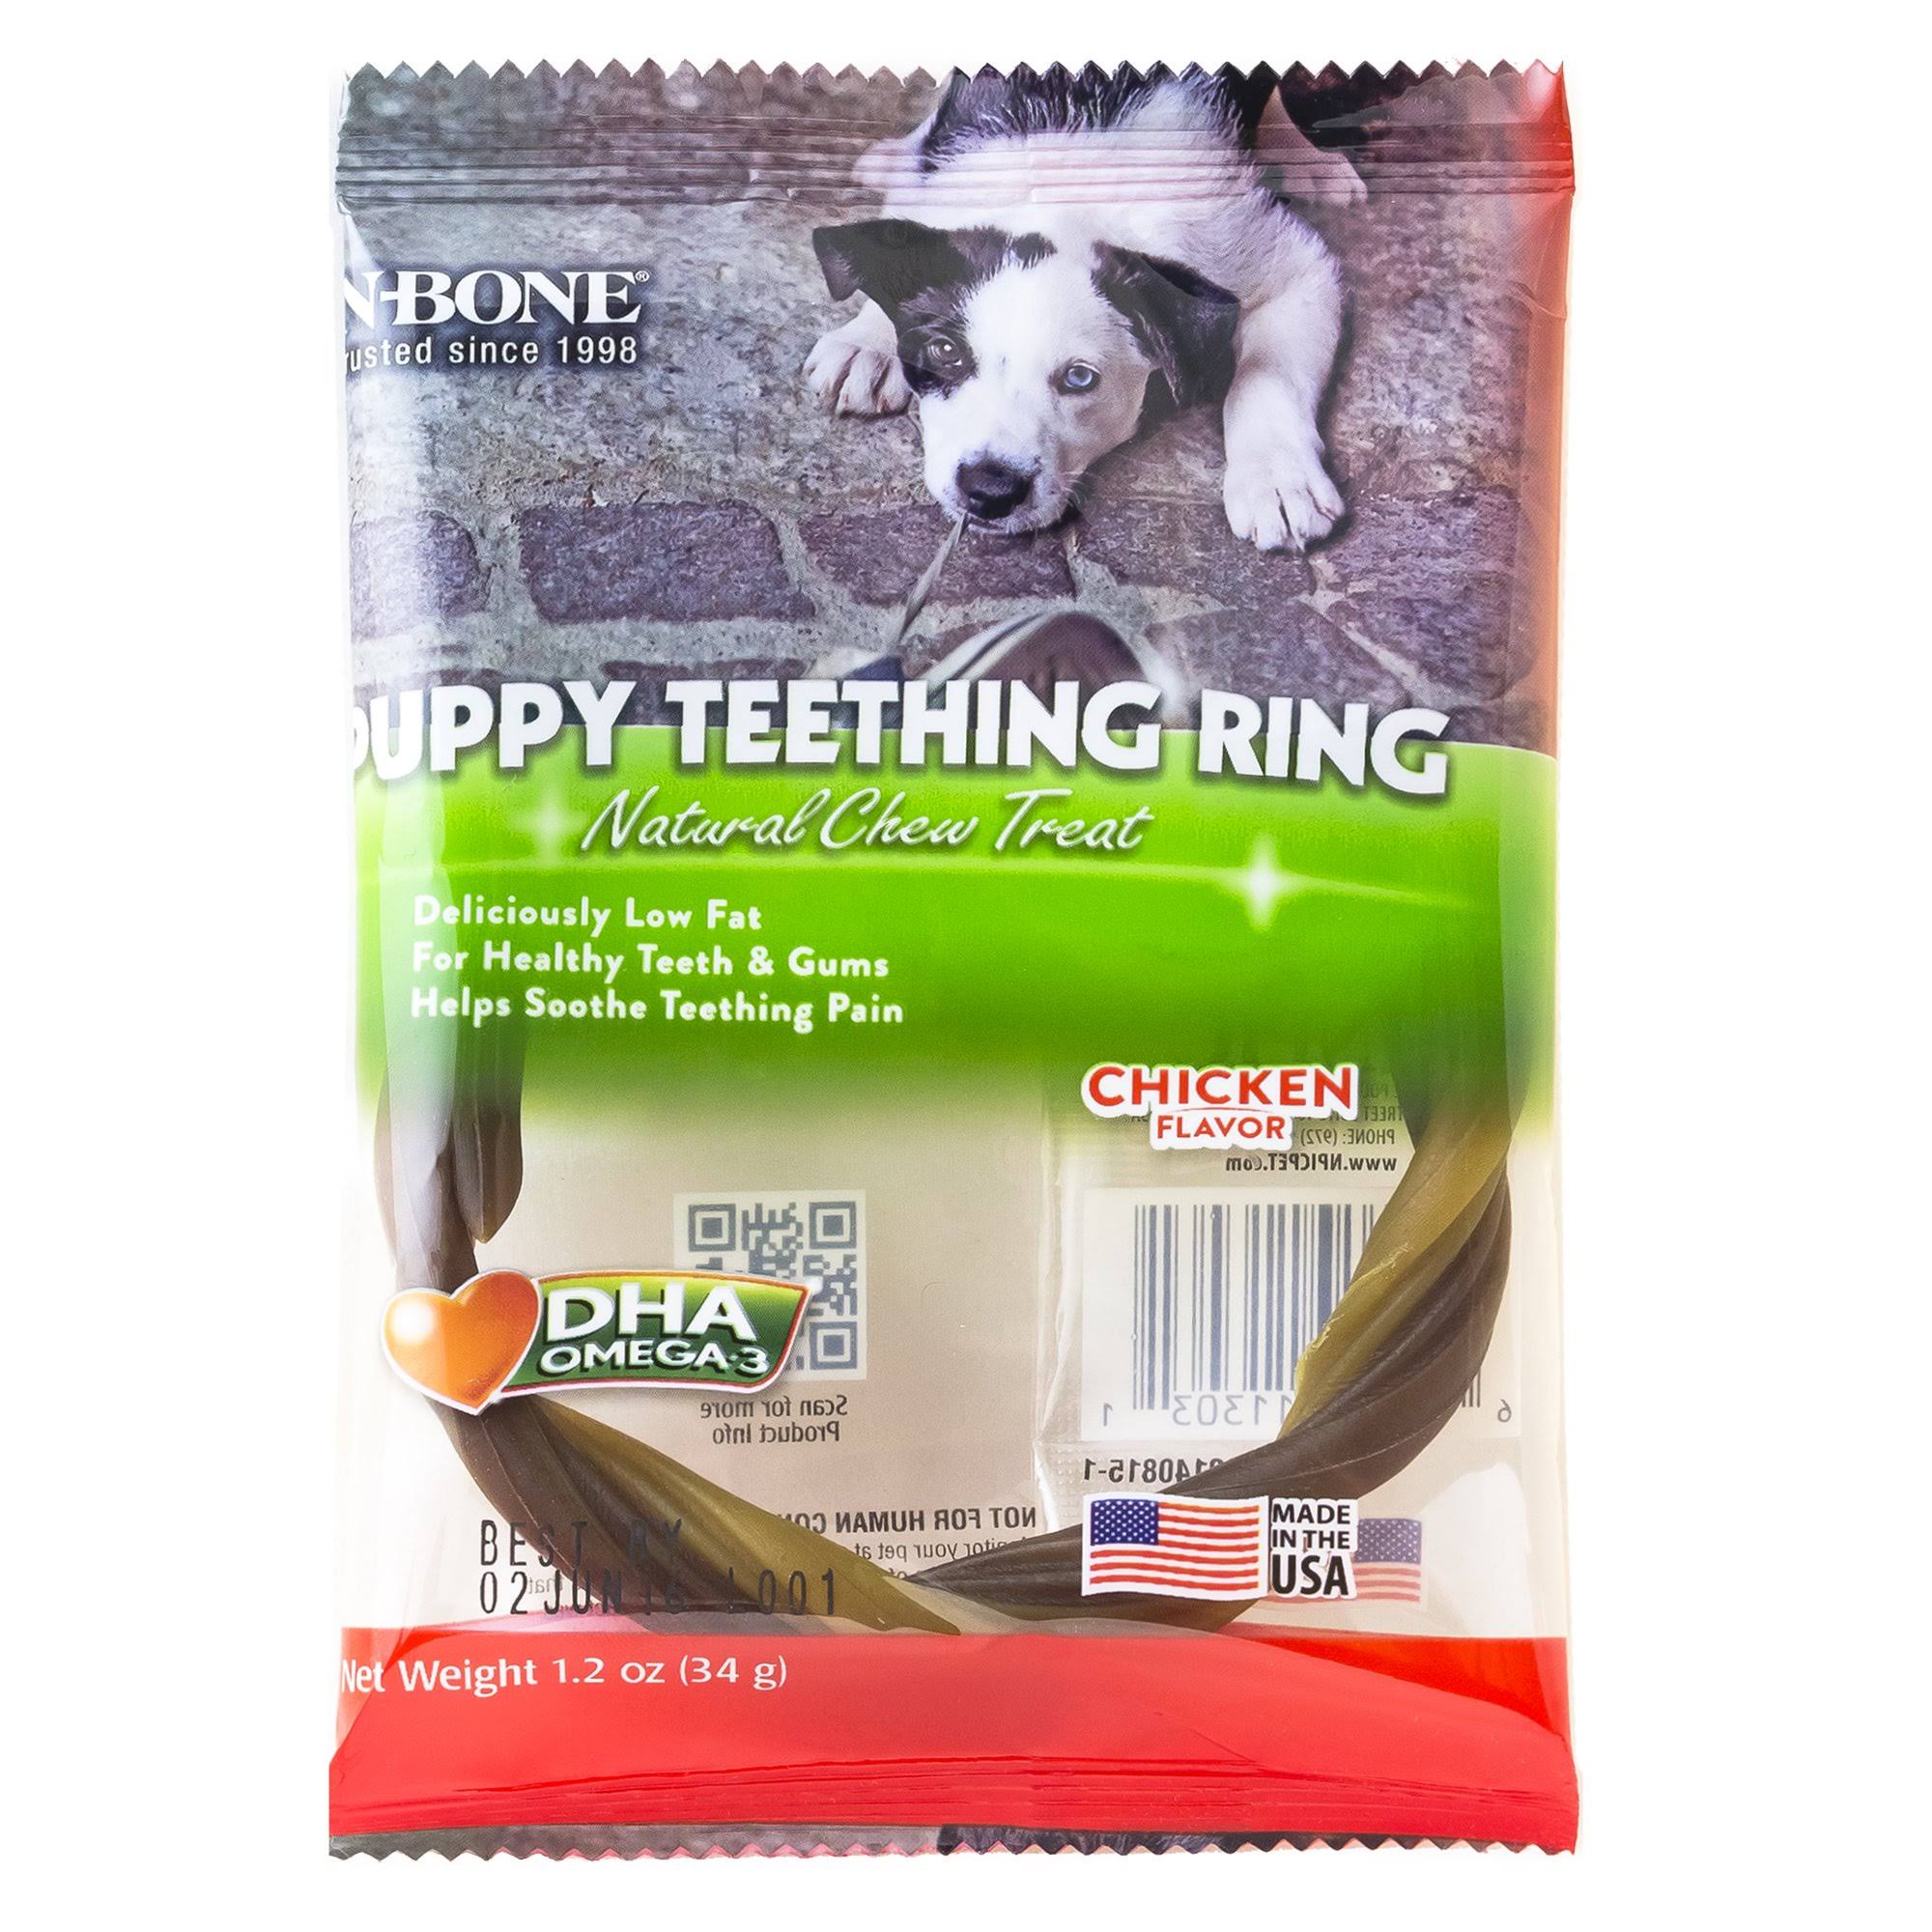 N-Bone Puppy Teething Ring Natural Chew Treat - Chicken Flavor